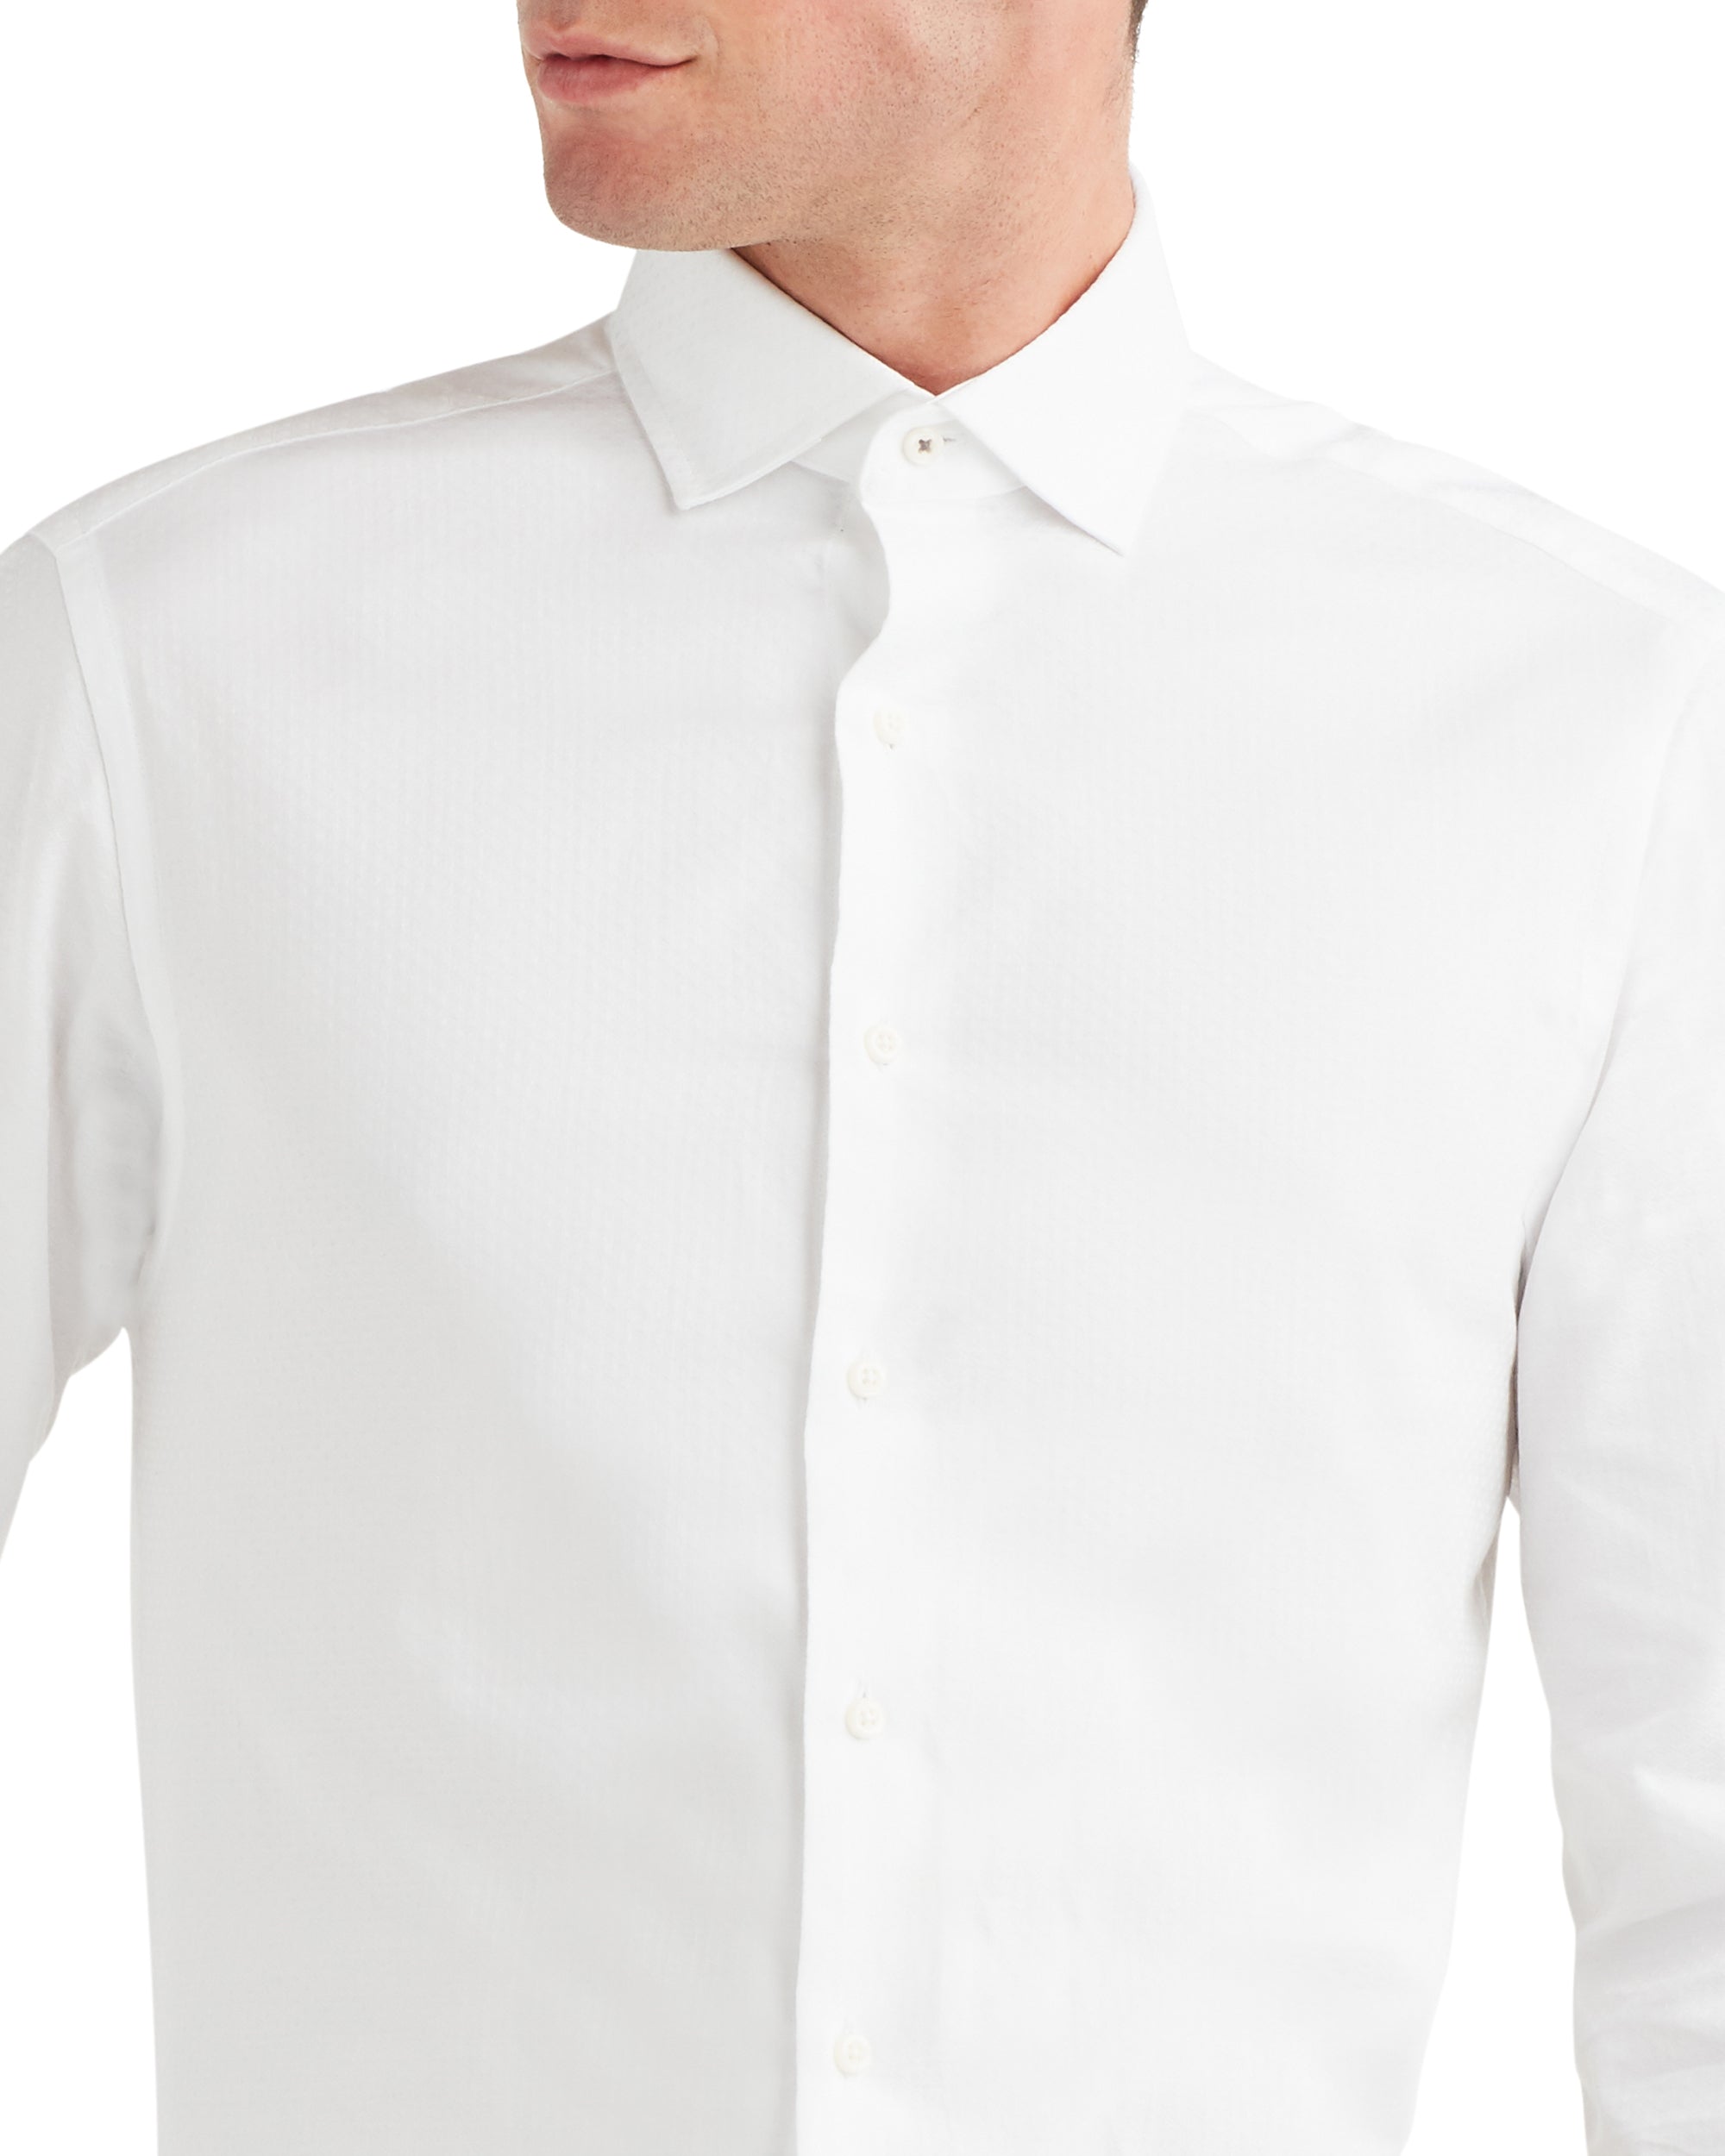 slim fit white dress shirt